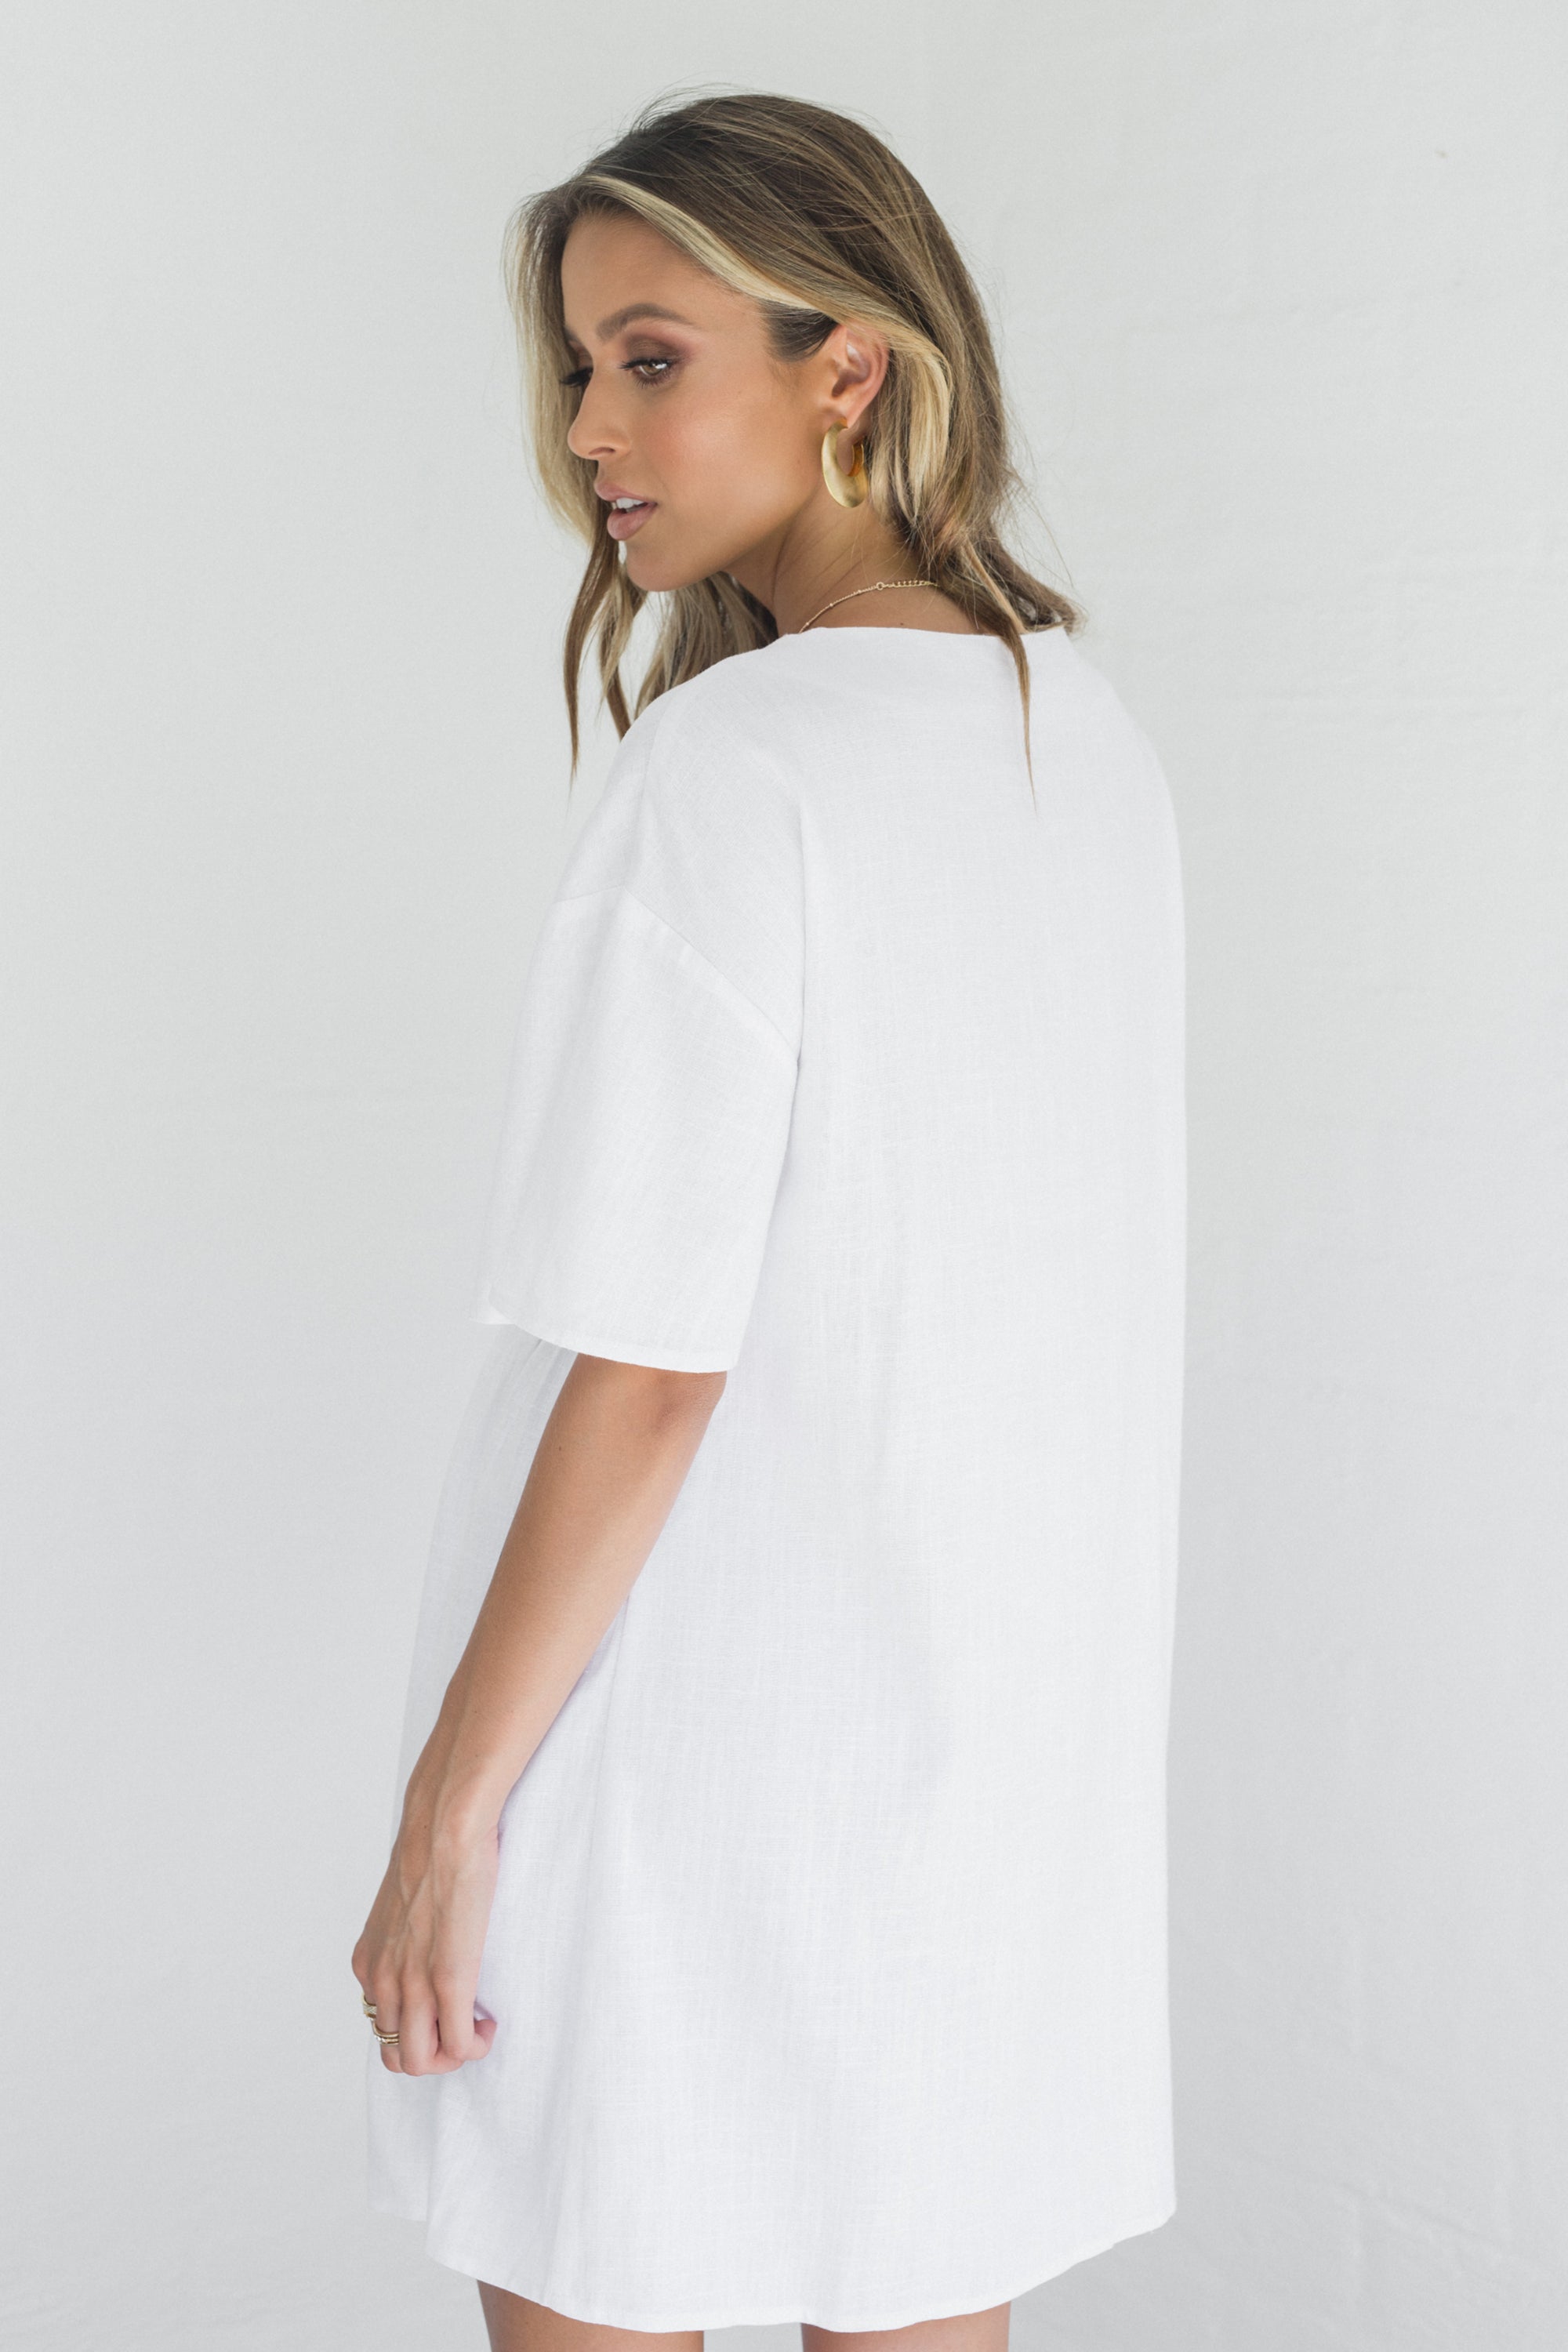 HAMMOCK DRESS - WHITE